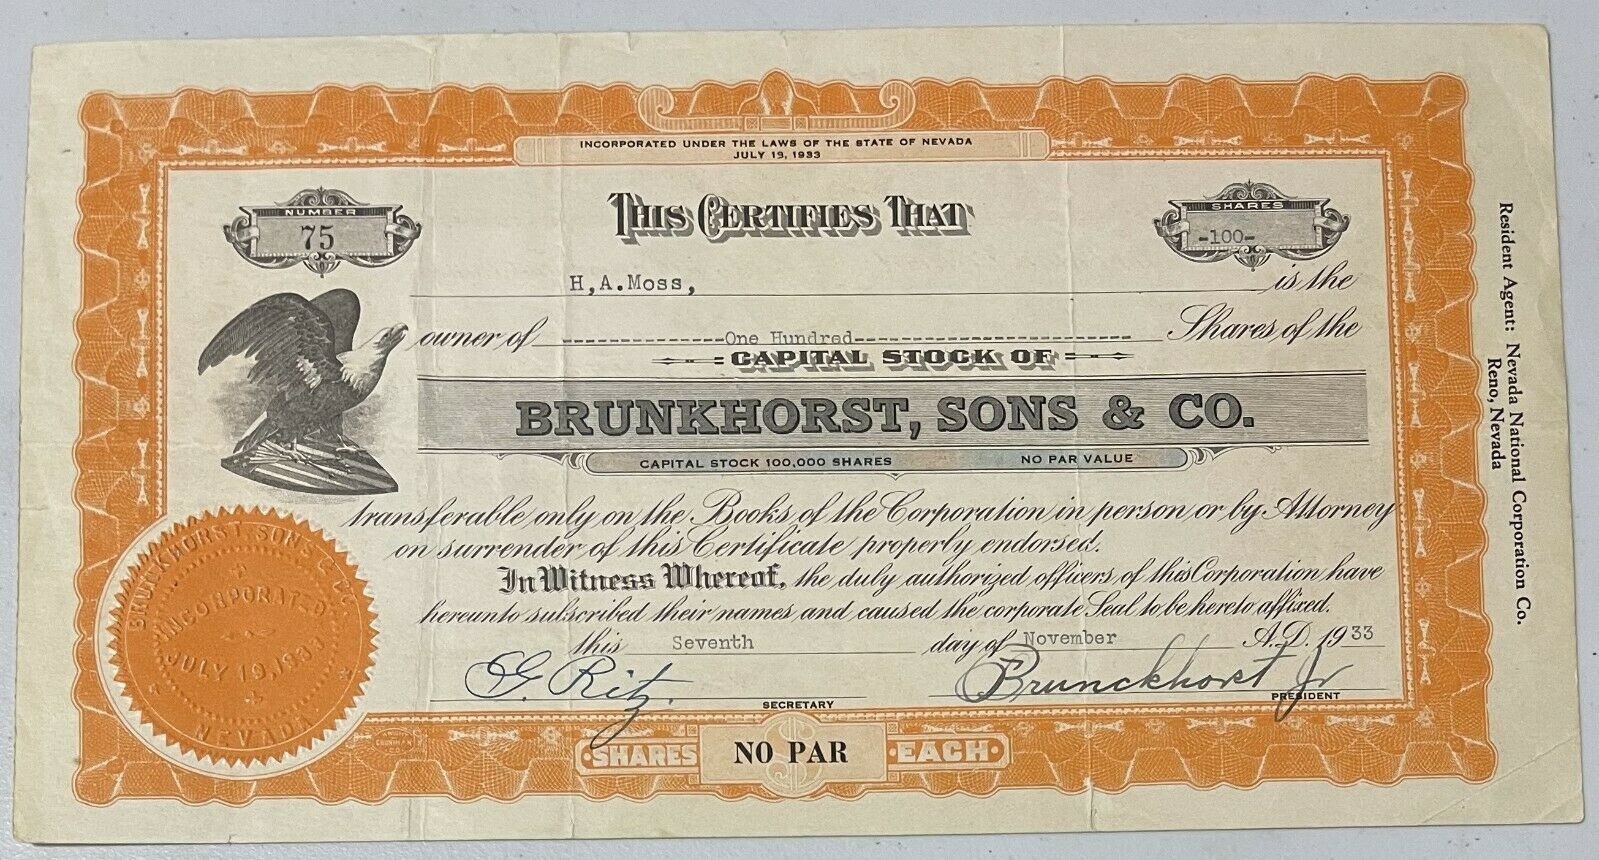 1933 BRUNKHORST, SONS & CO. Stock Certificate NEVADA